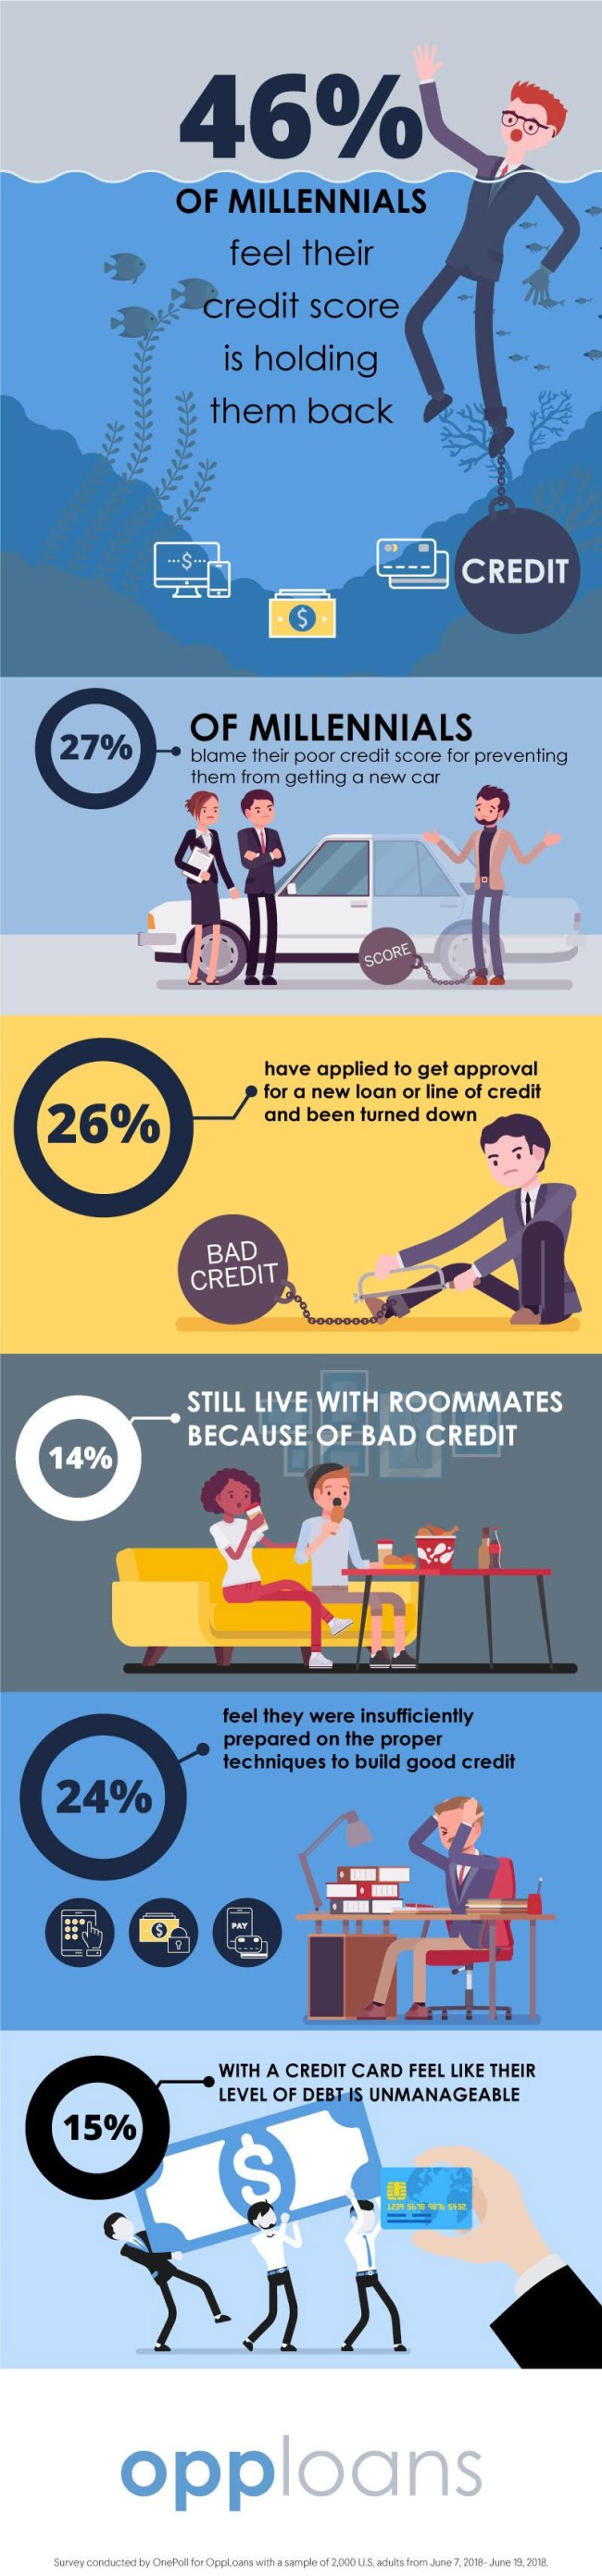 Millennials Credit Scores Holding Back Life